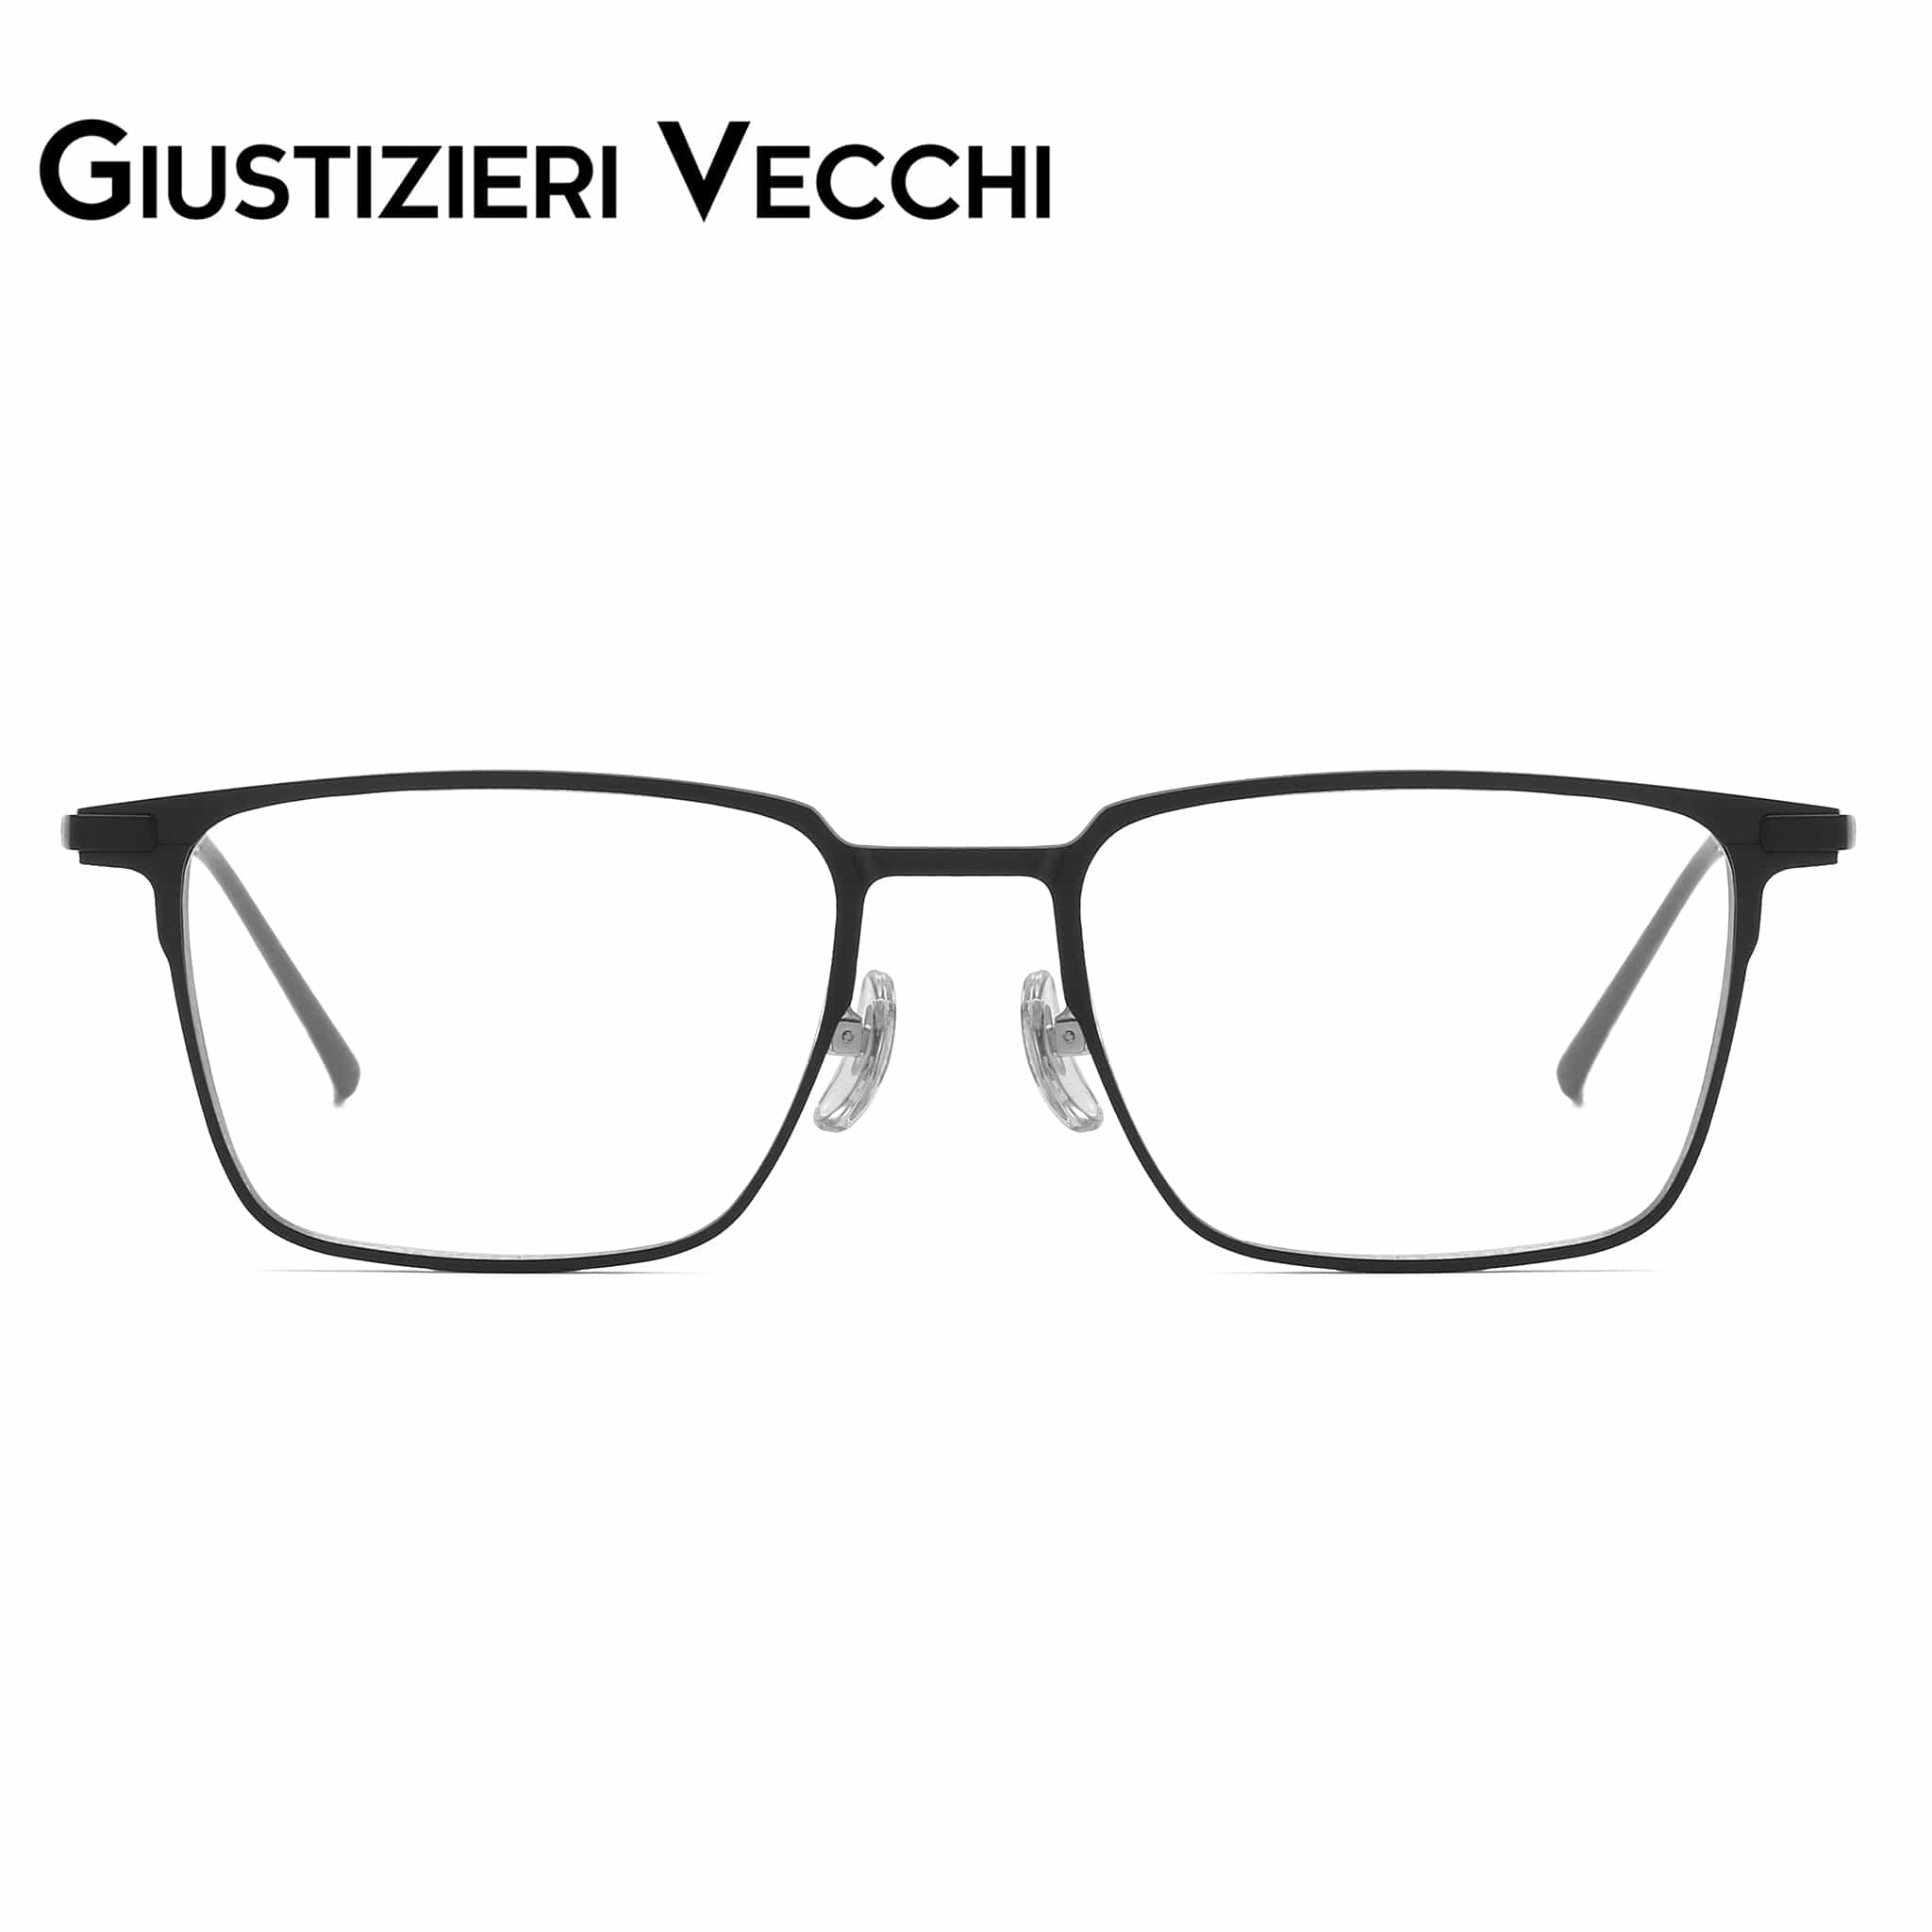 GIUSTIZIERI VECCHI Eyeglasses Medium / Black SkyBlaze